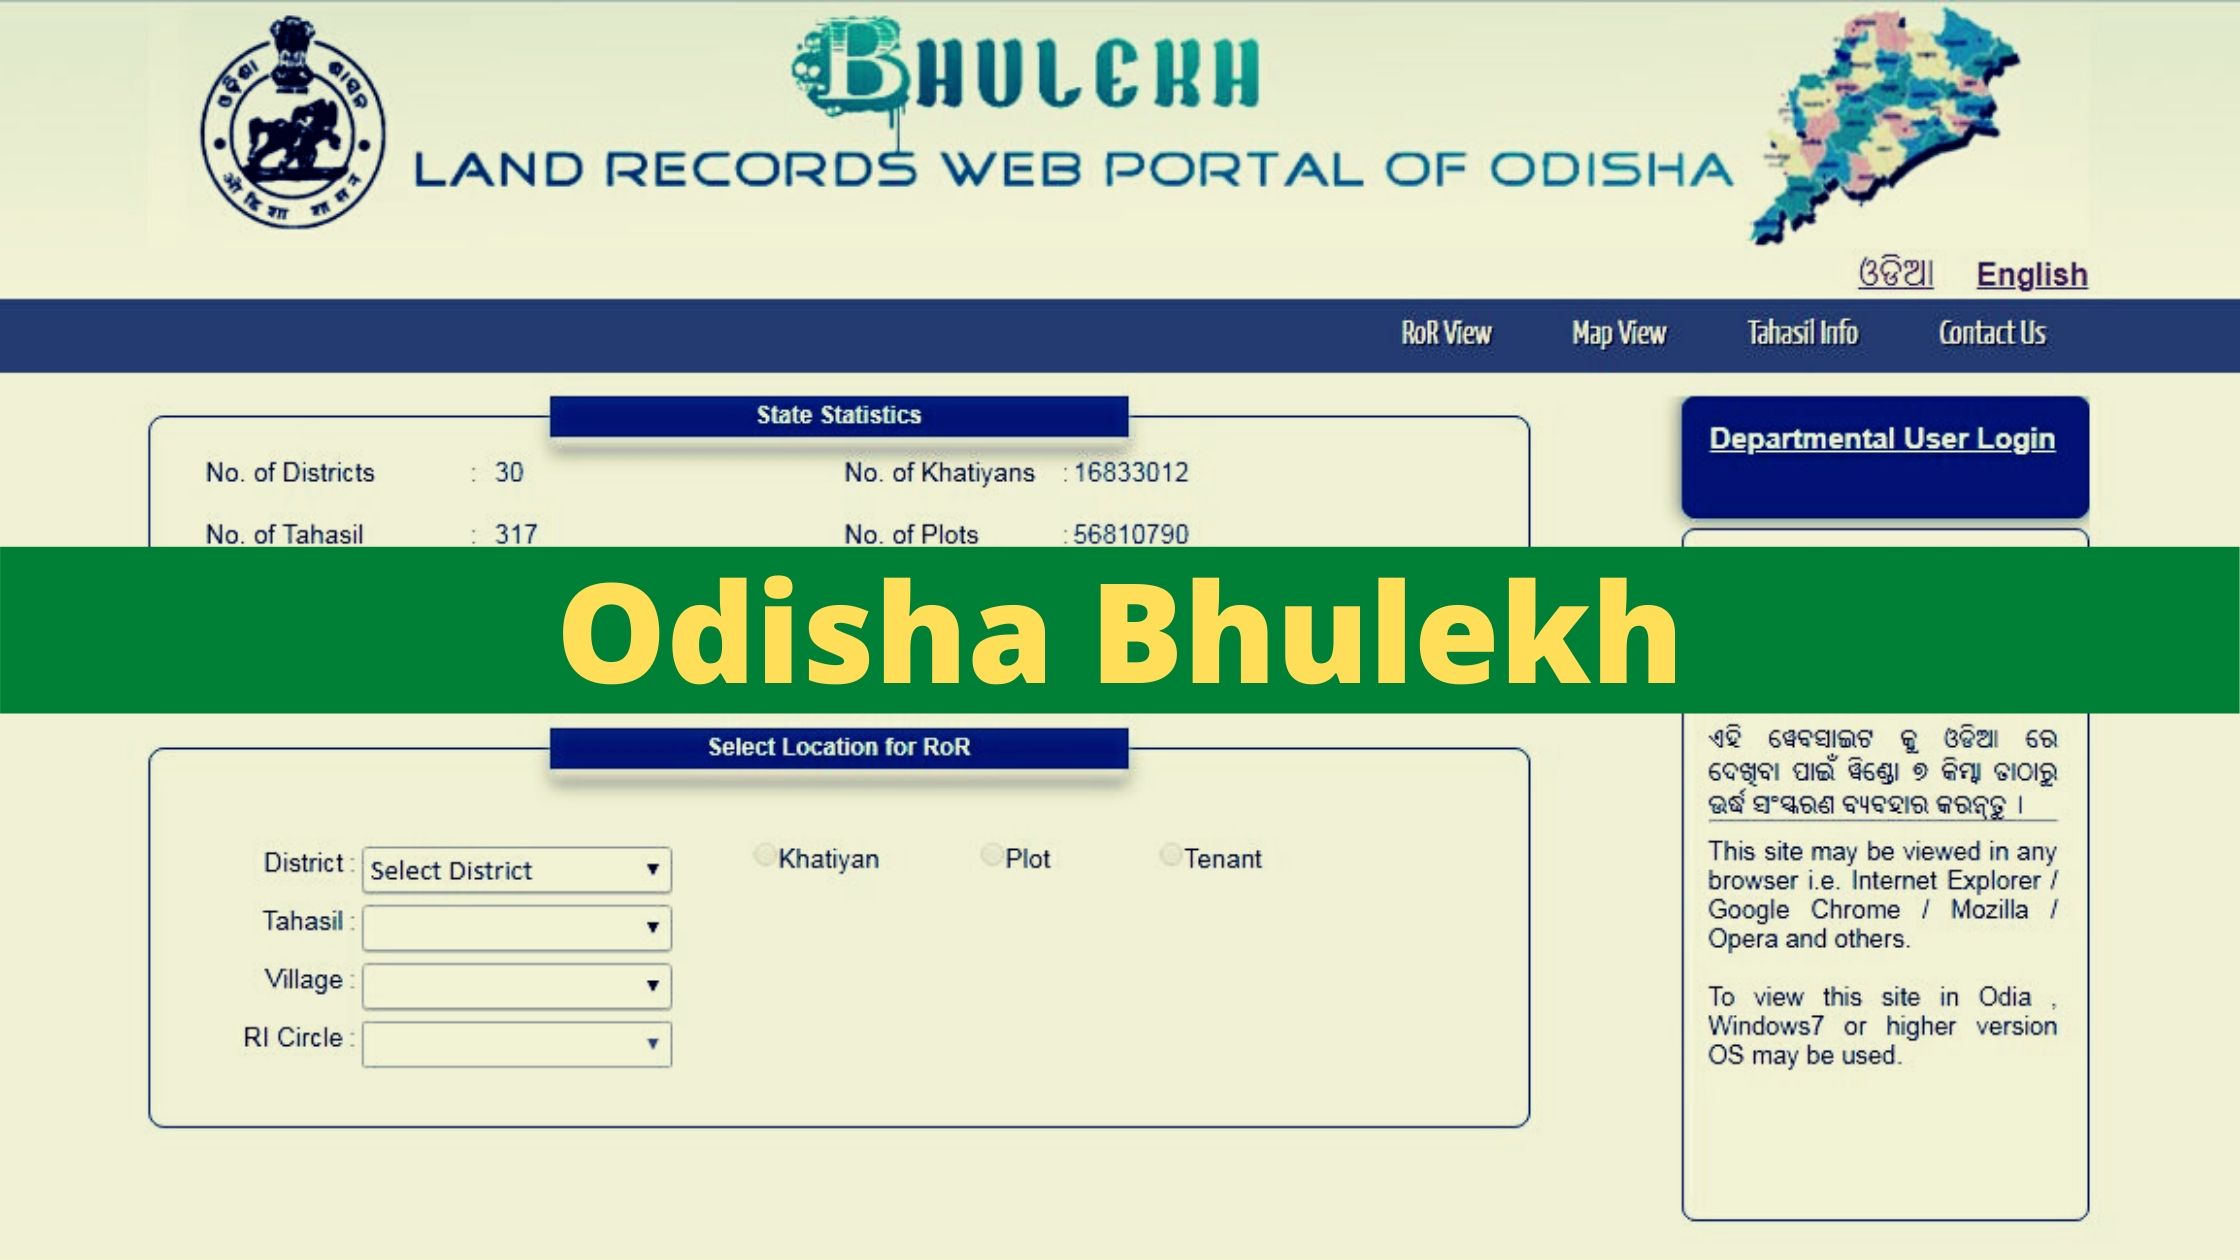 Bhulekh orissa land record - skinsvsera